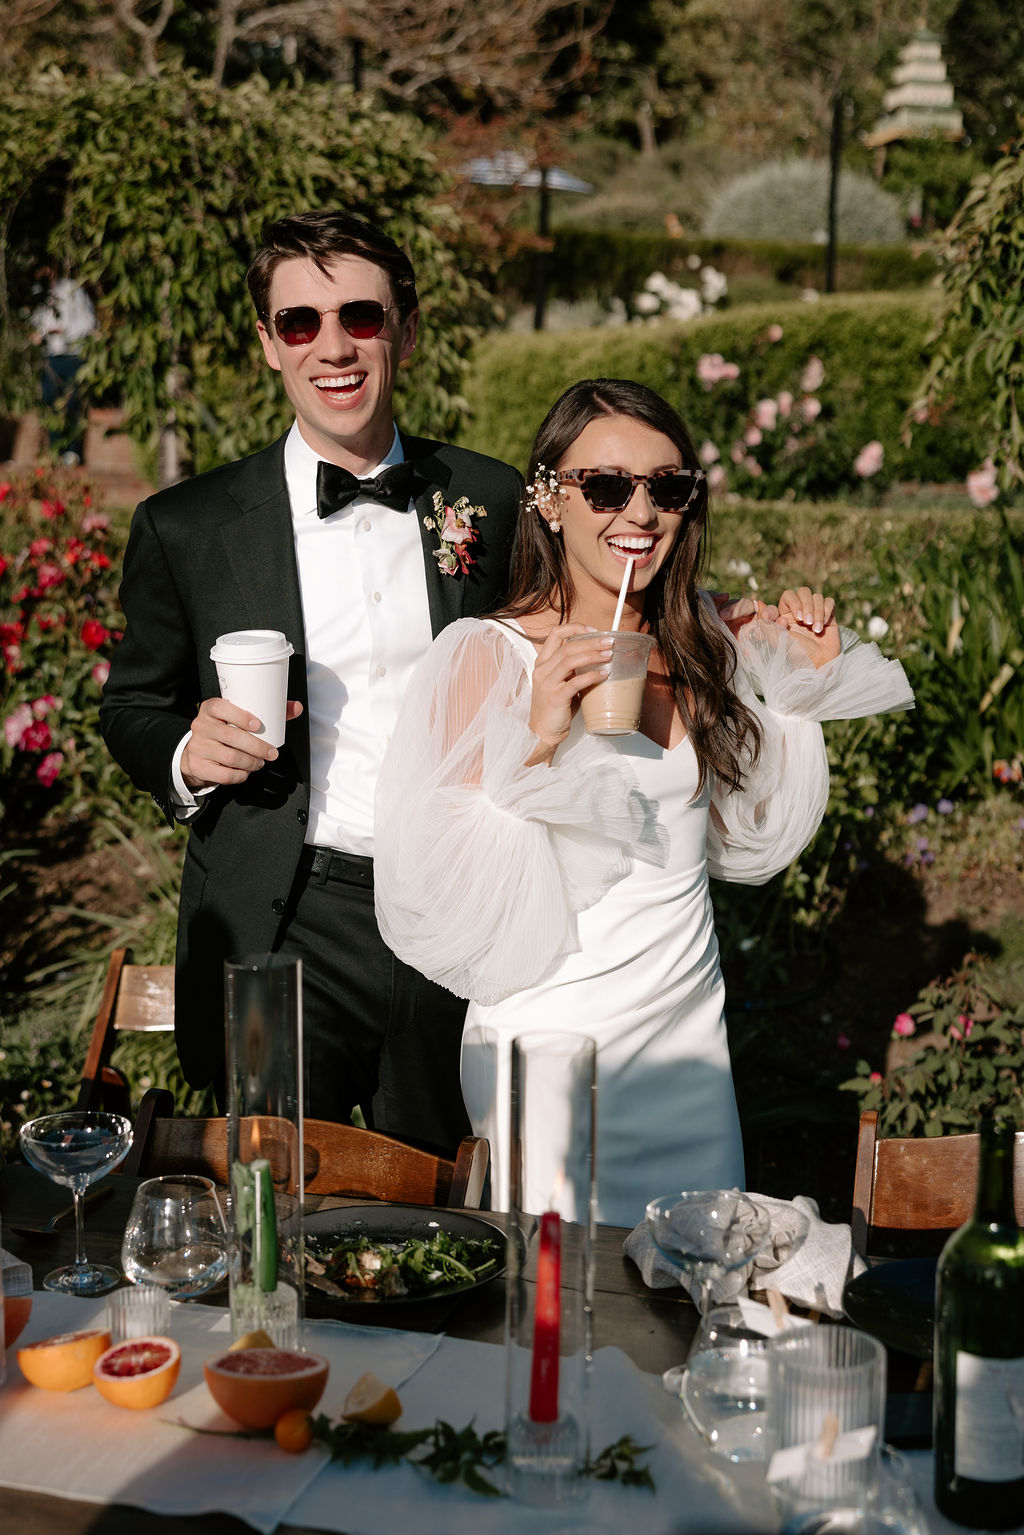 Sunglasses as wedding guest favors